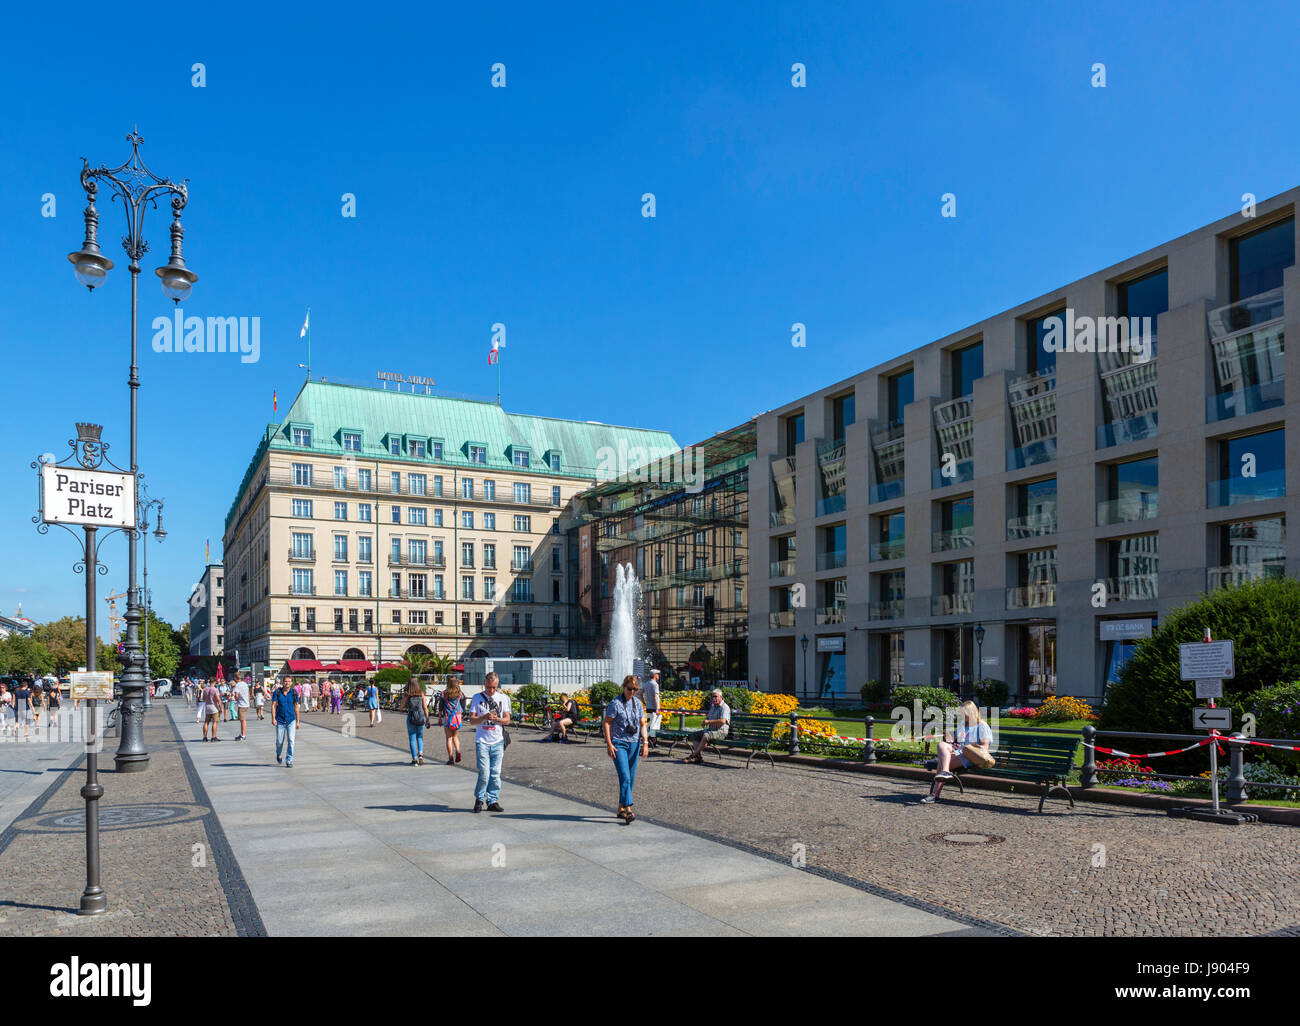 Pariser Platz looking towards the Hotel Adlon Kempinski, Mitte, Berlin, Germany Stock Photo